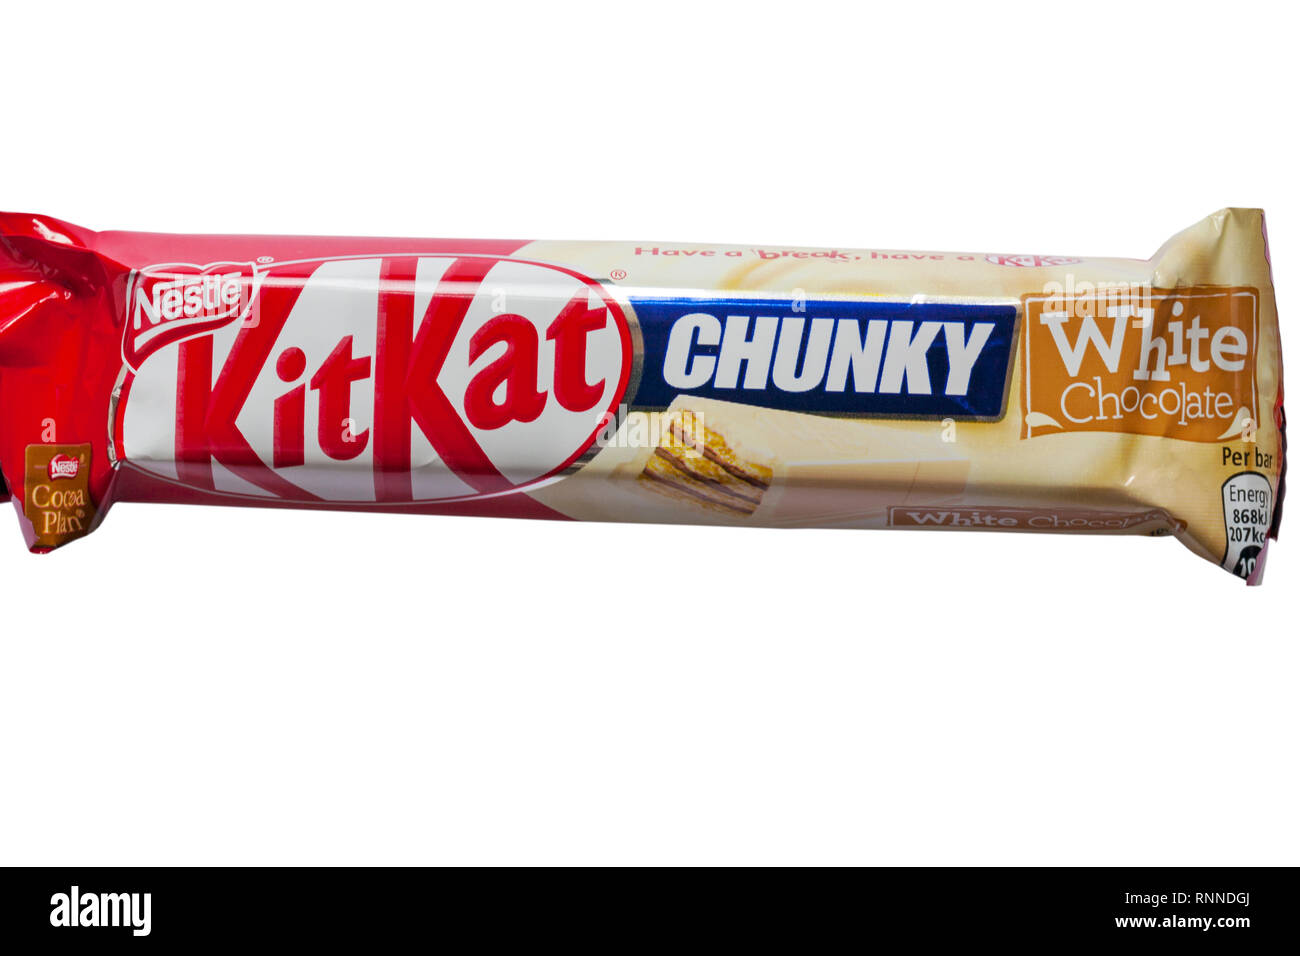 Nestle KitKat chunky white chocolate bar isolated on white background -  crispy wafer fingers covered with white chocolate - kit kat Stock Photo -  Alamy